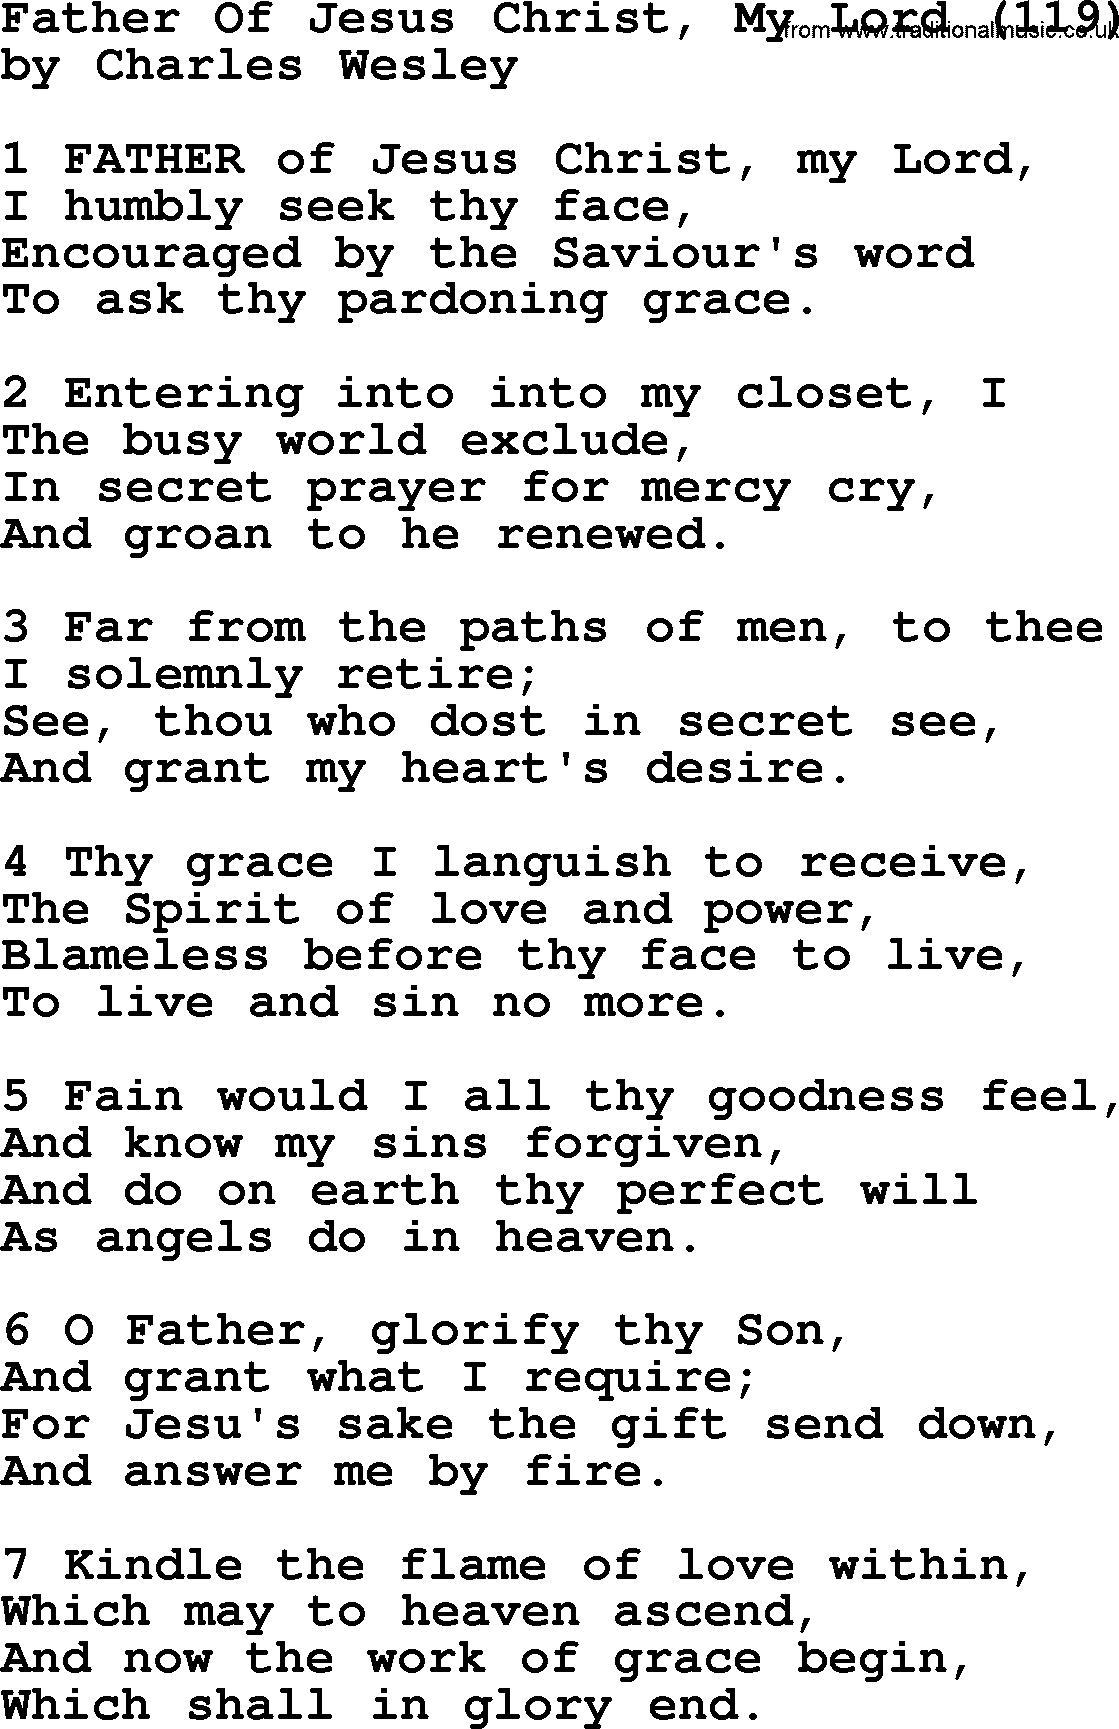 Charles Wesley hymn: Father Of Jesus Christ, My Lord (119), lyrics